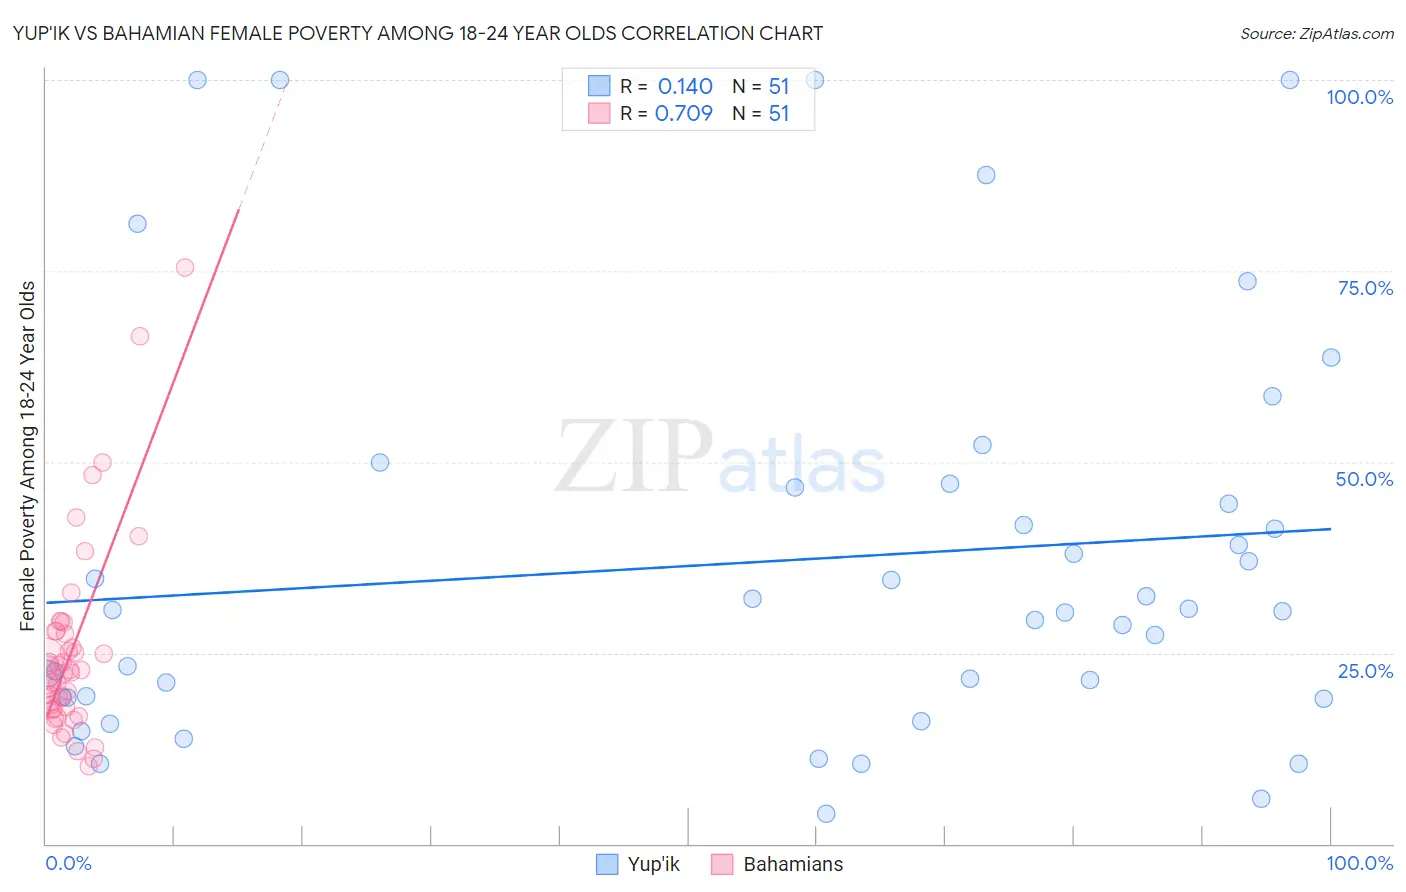 Yup'ik vs Bahamian Female Poverty Among 18-24 Year Olds